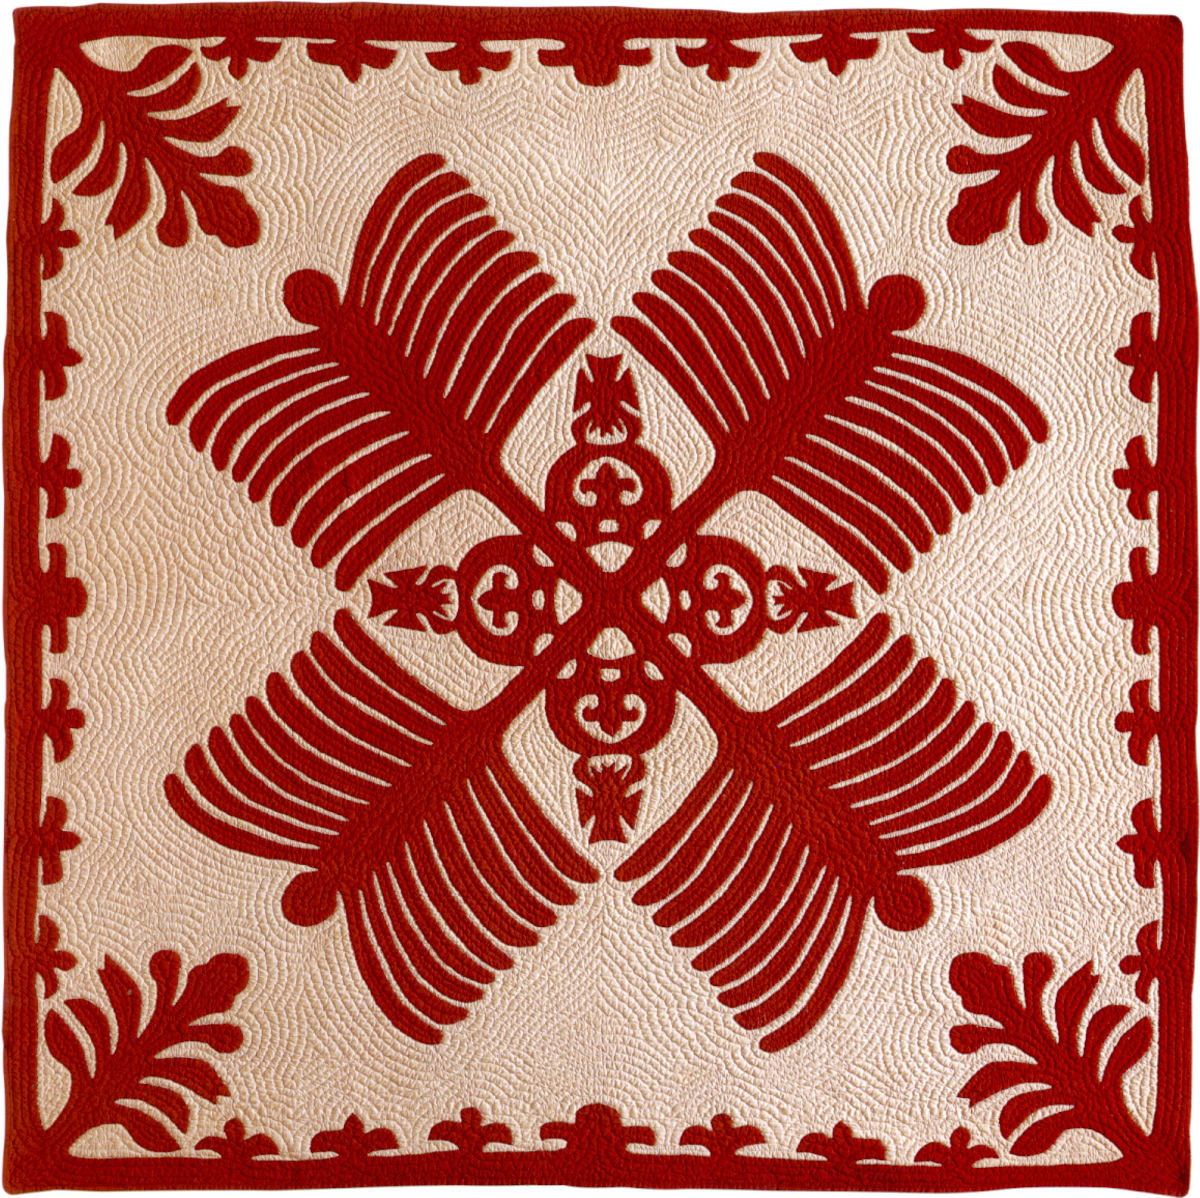 An example of a Hawaiian quilt.